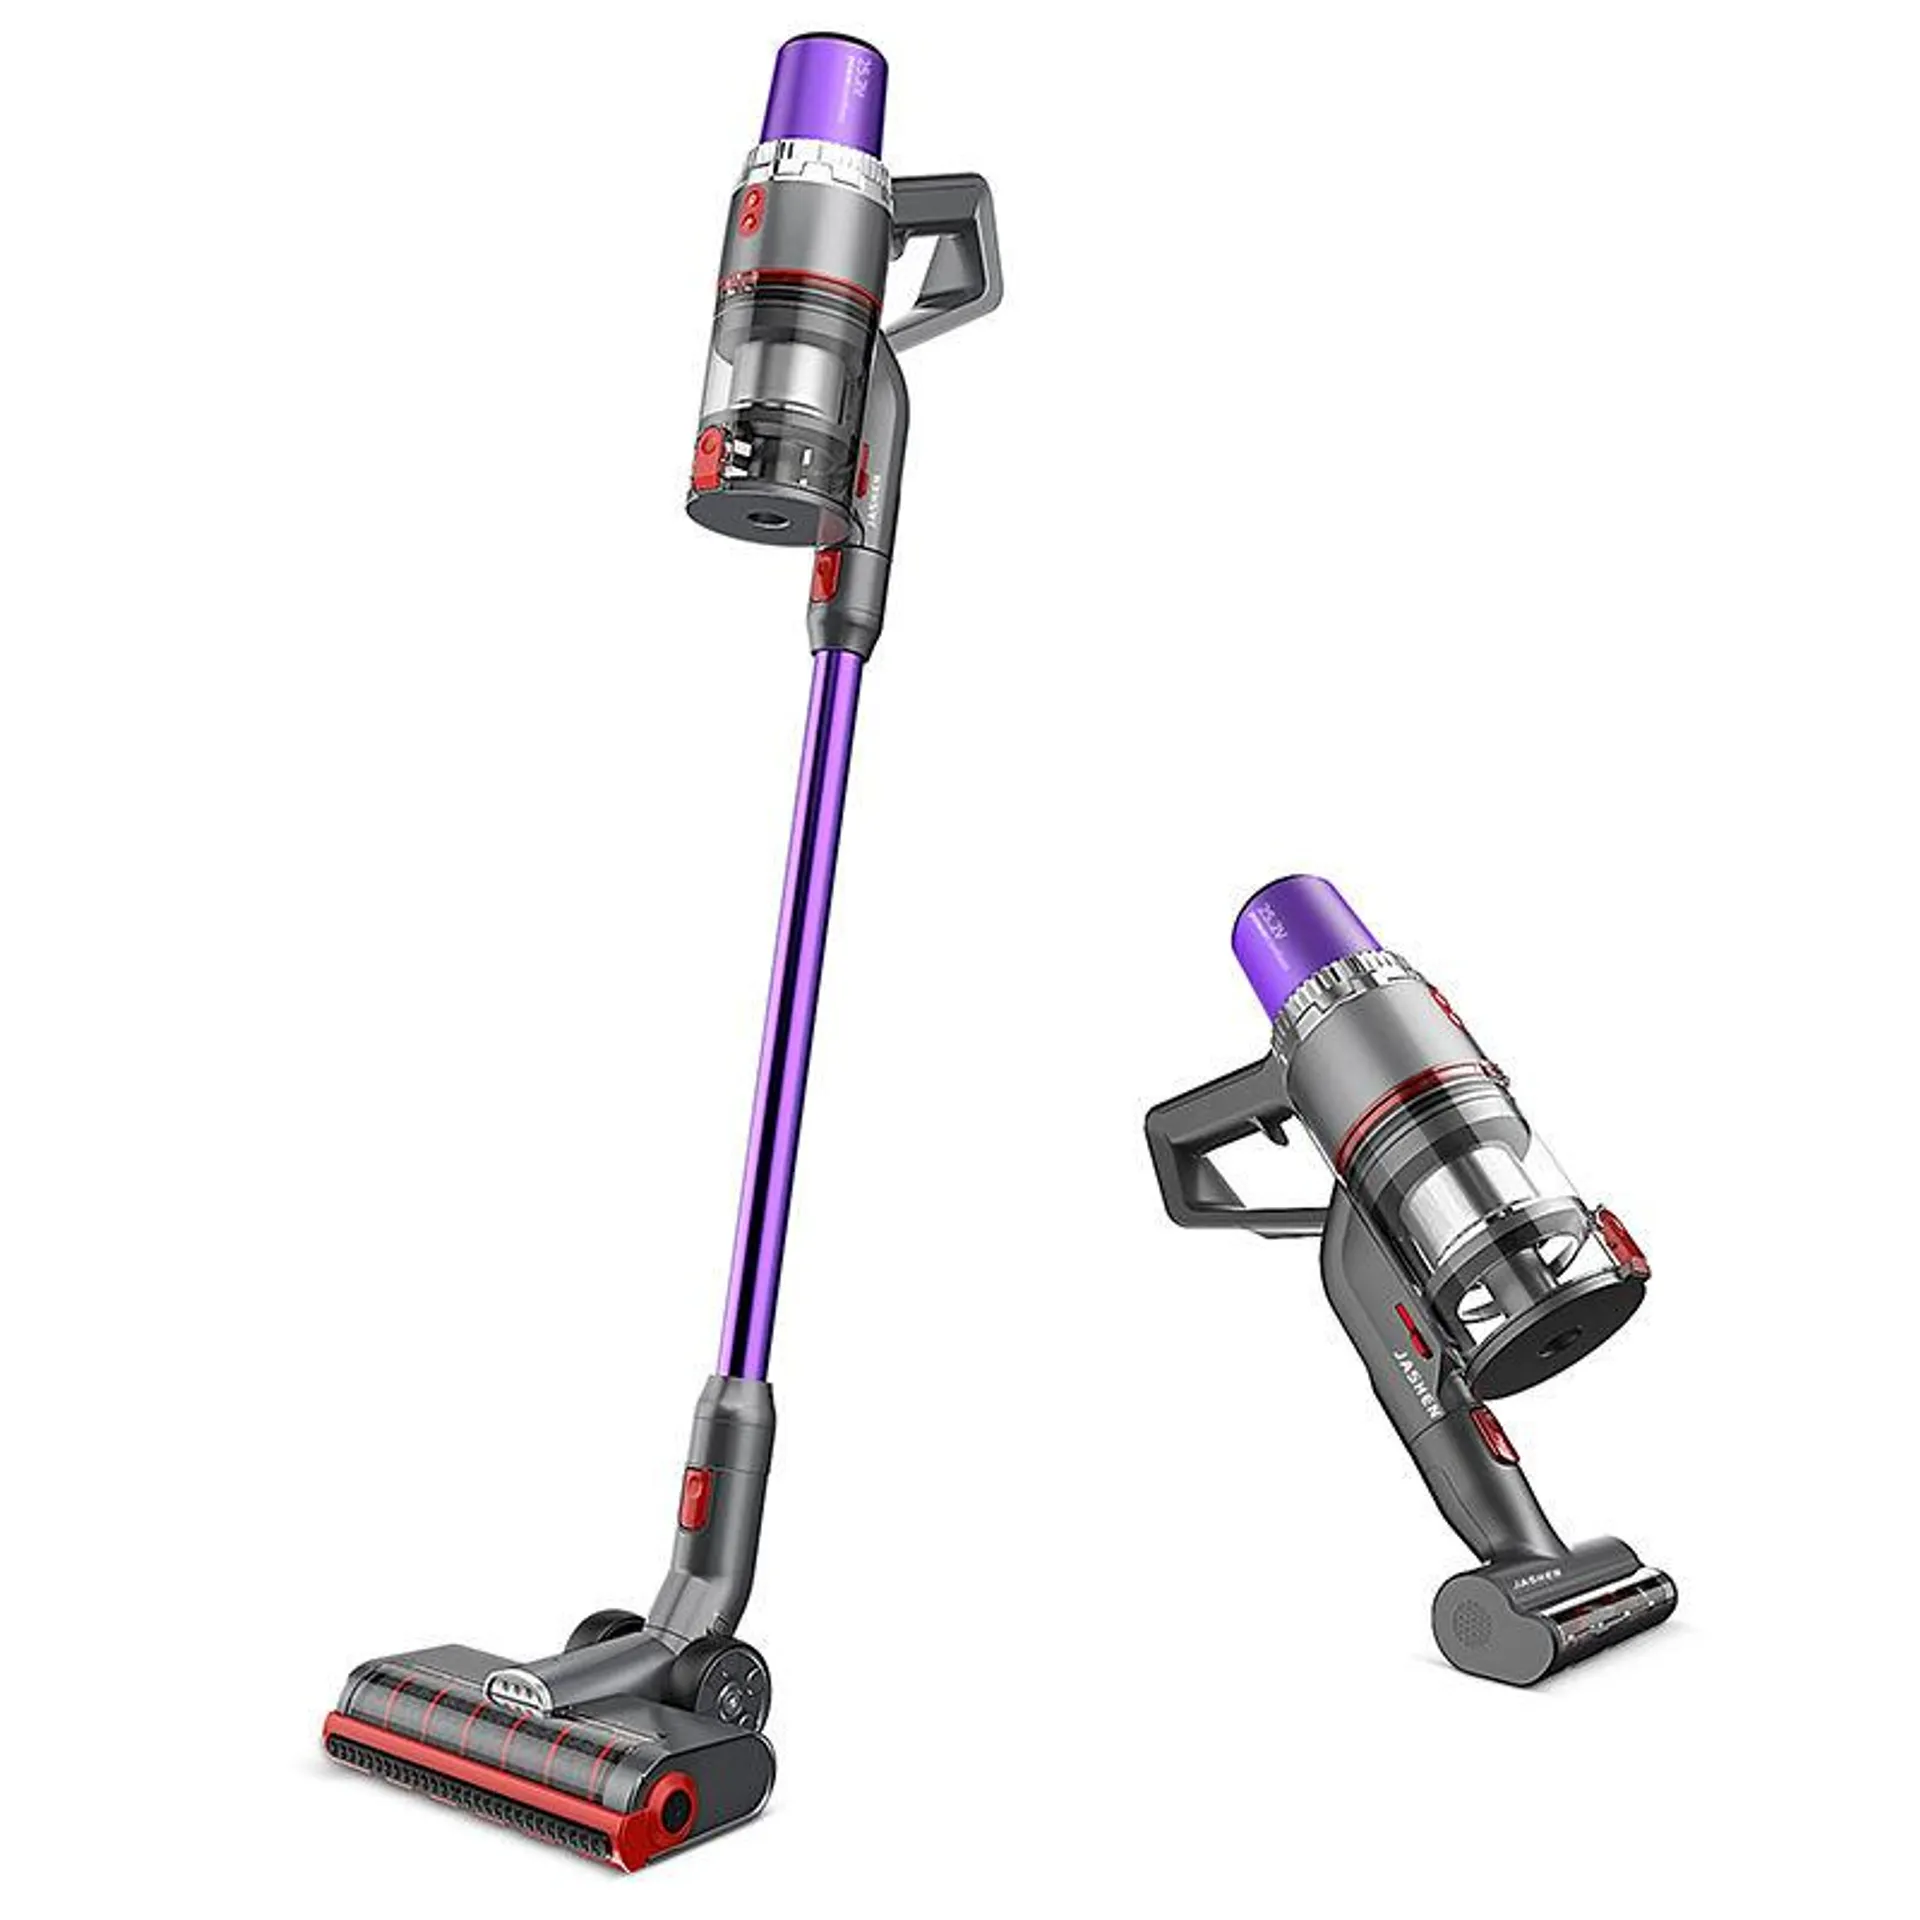 Jashen Cordless Stick Vacuum Cleaner - Black